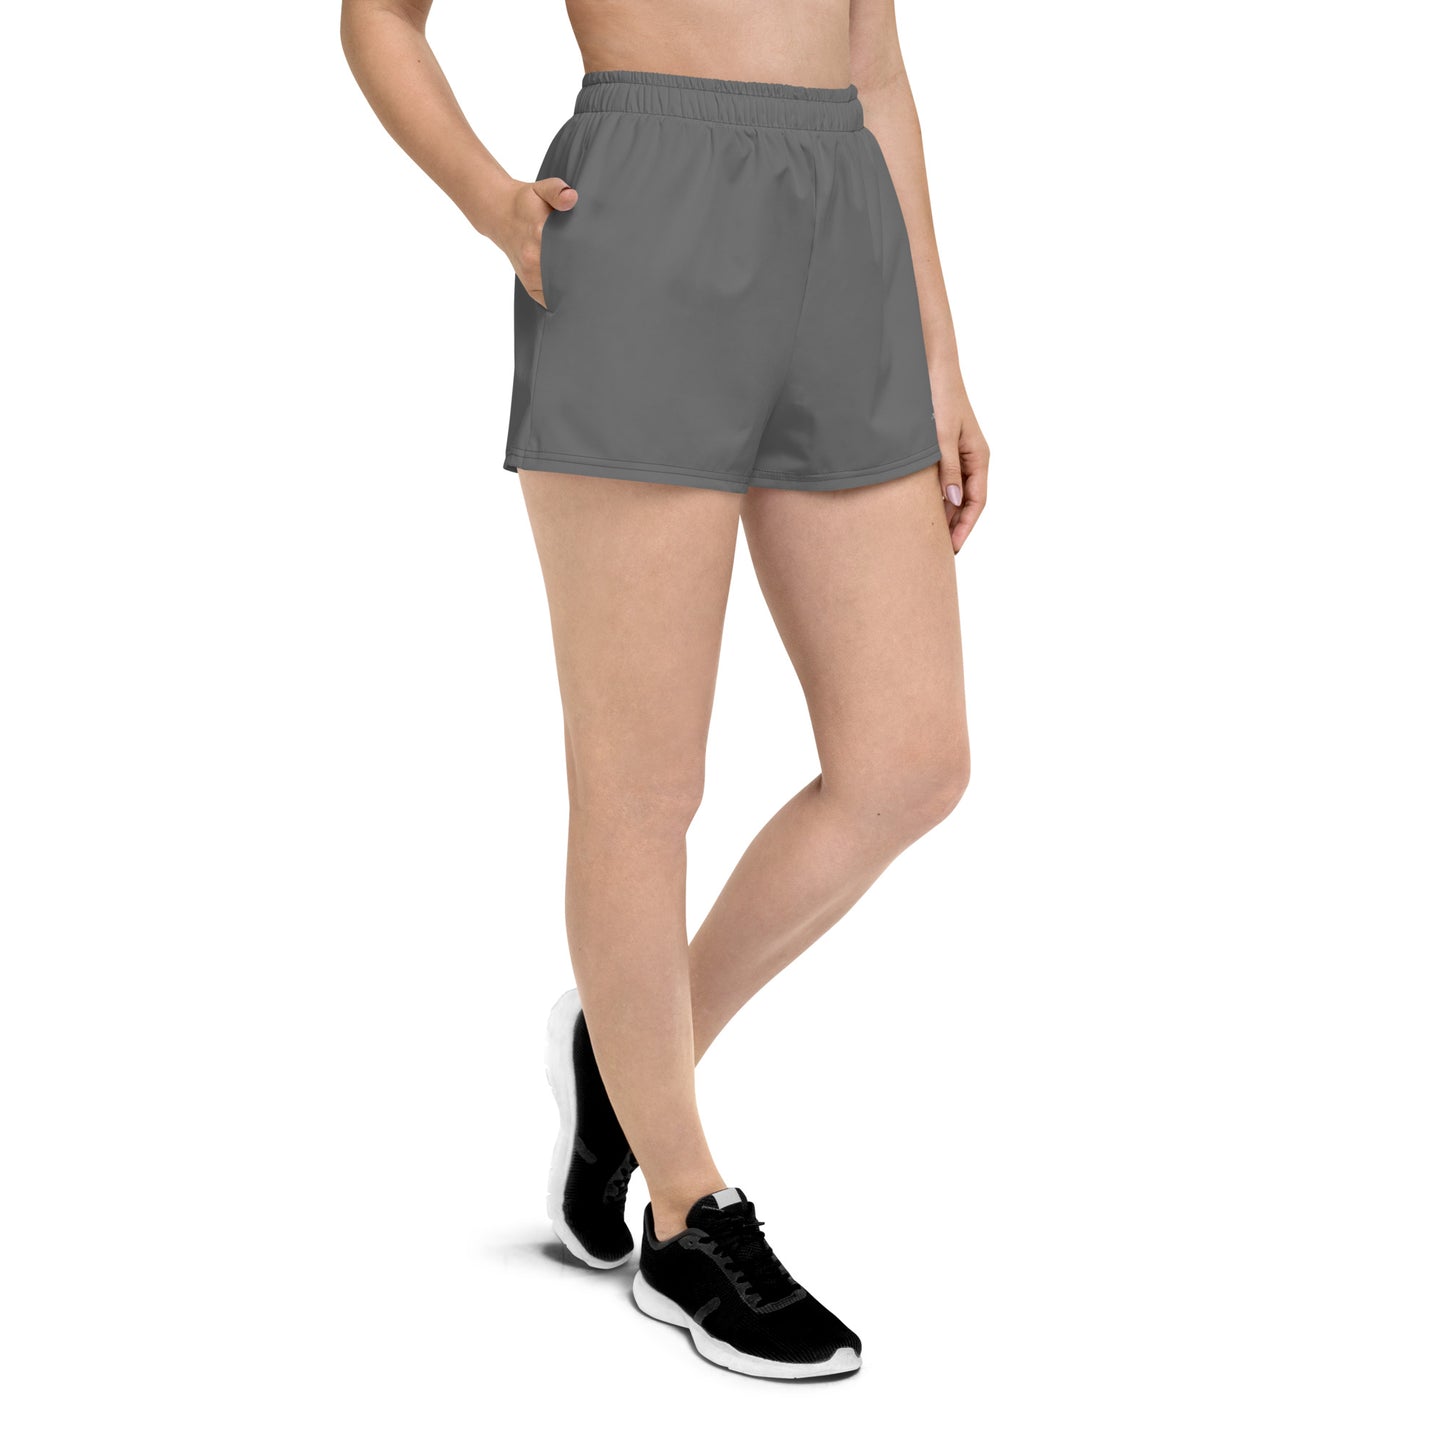 Women's Athletic Shorts: 2.5" - Light Grey